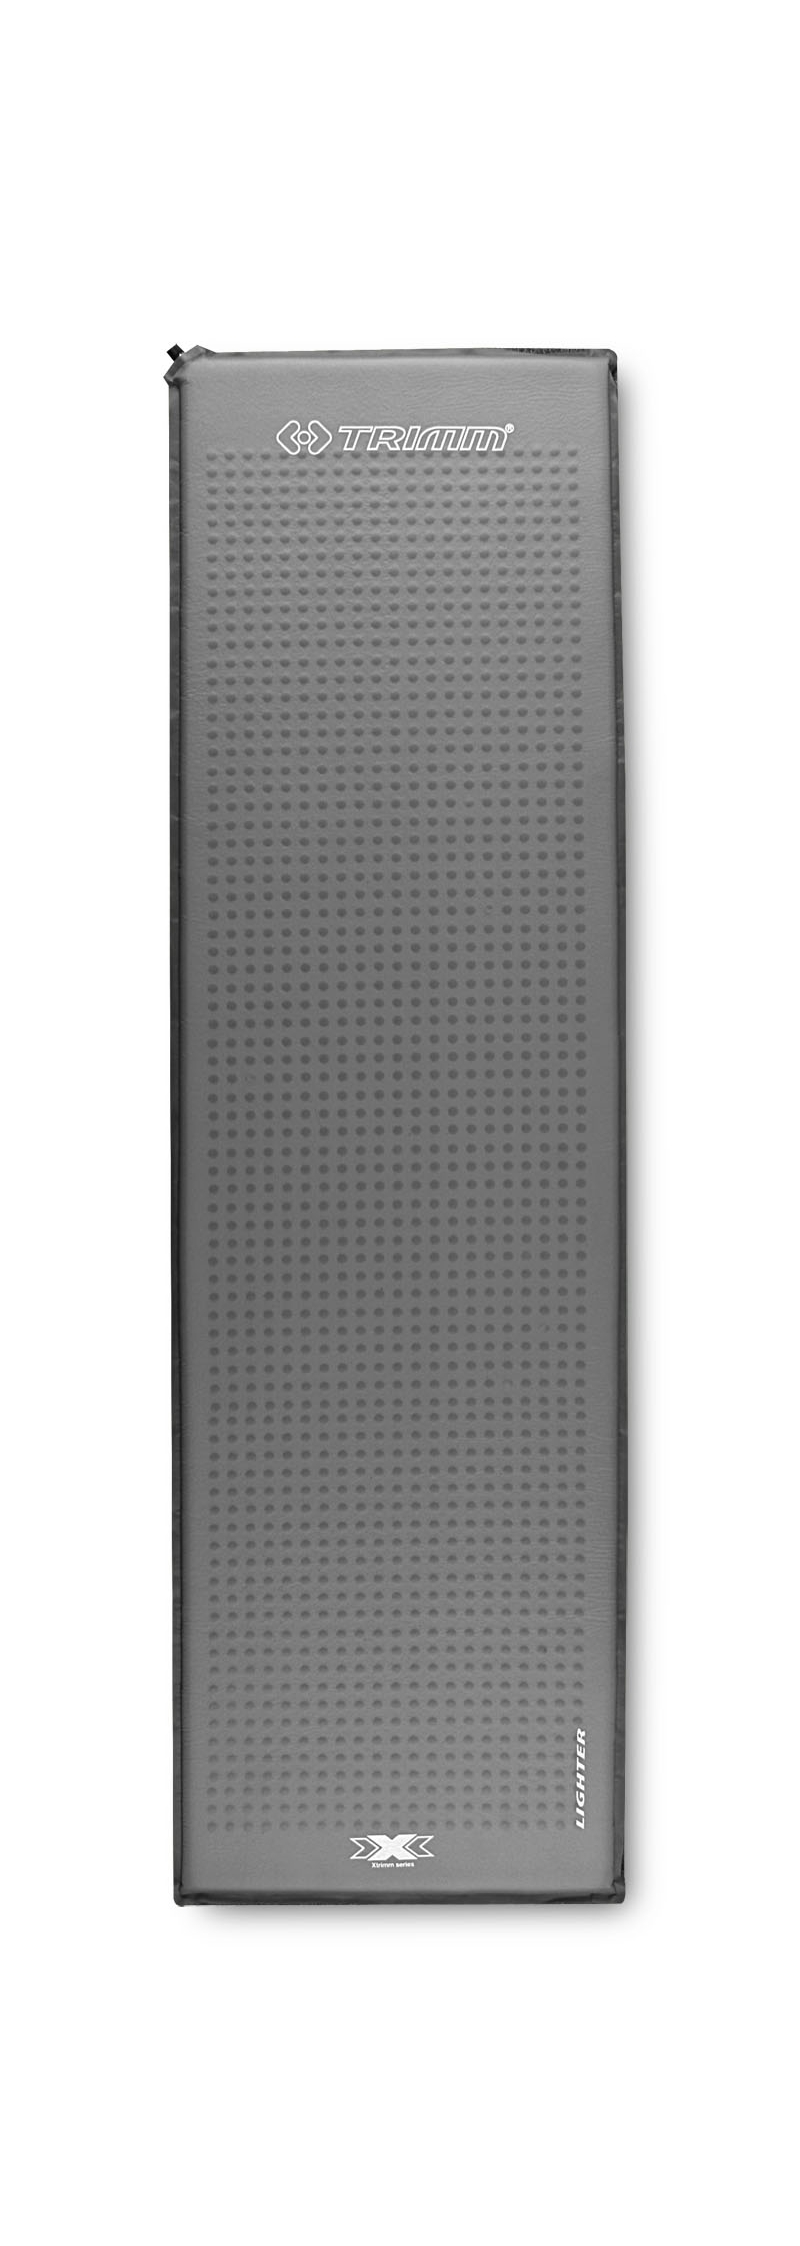 Самонадувающийся коврик Trimm Lighter 30 (Серый)